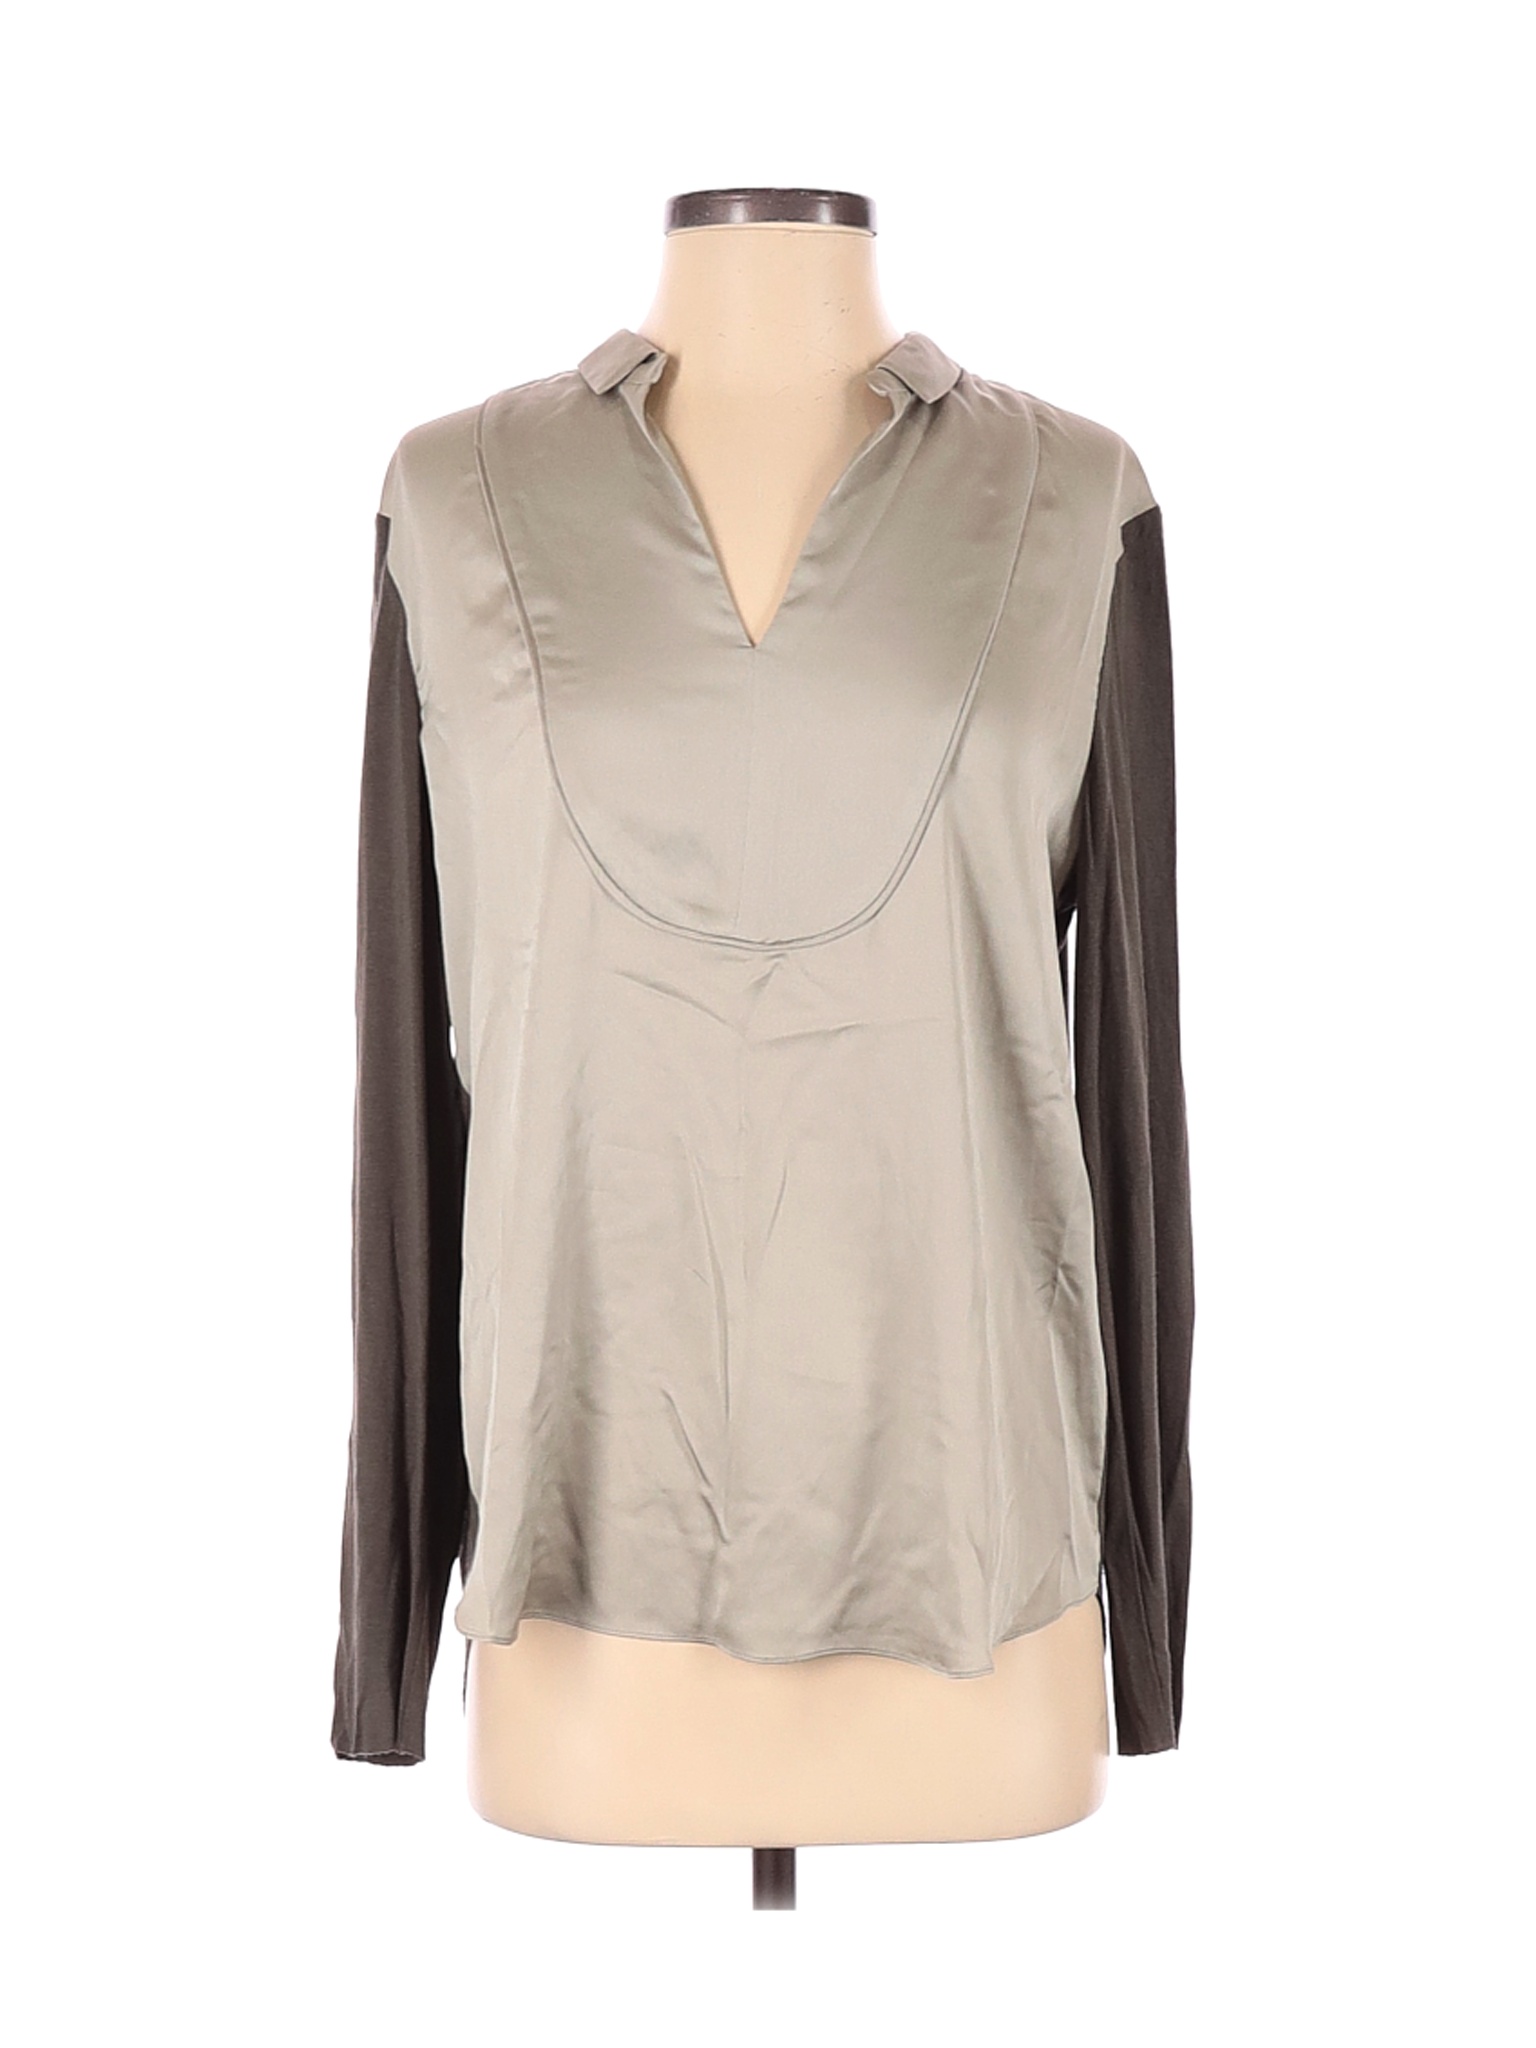 T Tahari Women Brown Long Sleeve Blouse M | eBay